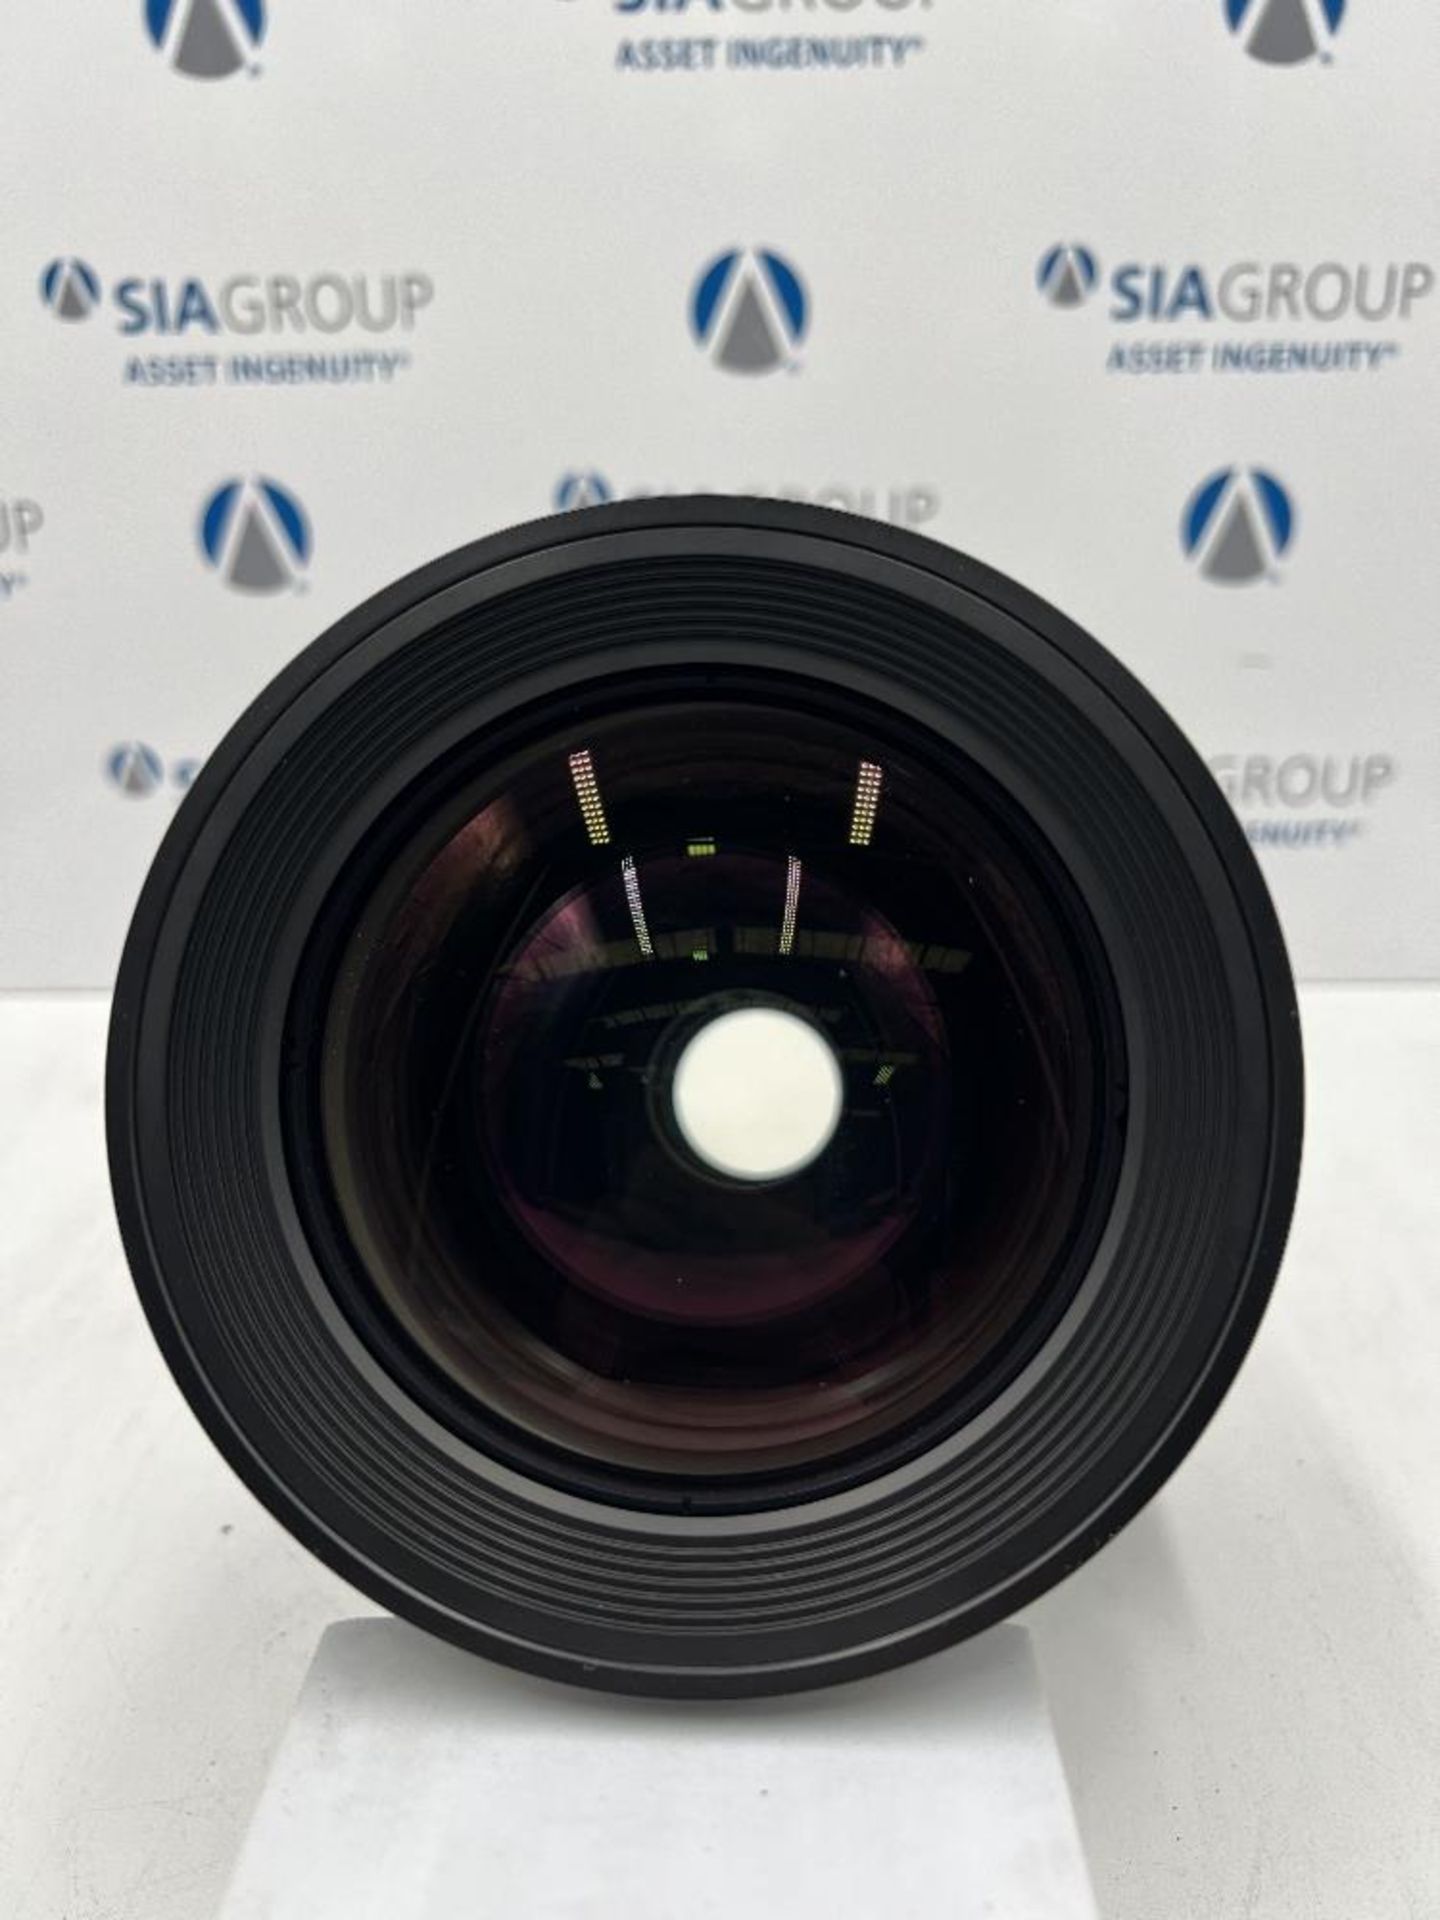 Panasonic ET-D75LE30 2.4-4.7 Projection Zoom Lens With Carrier Case - Image 5 of 8